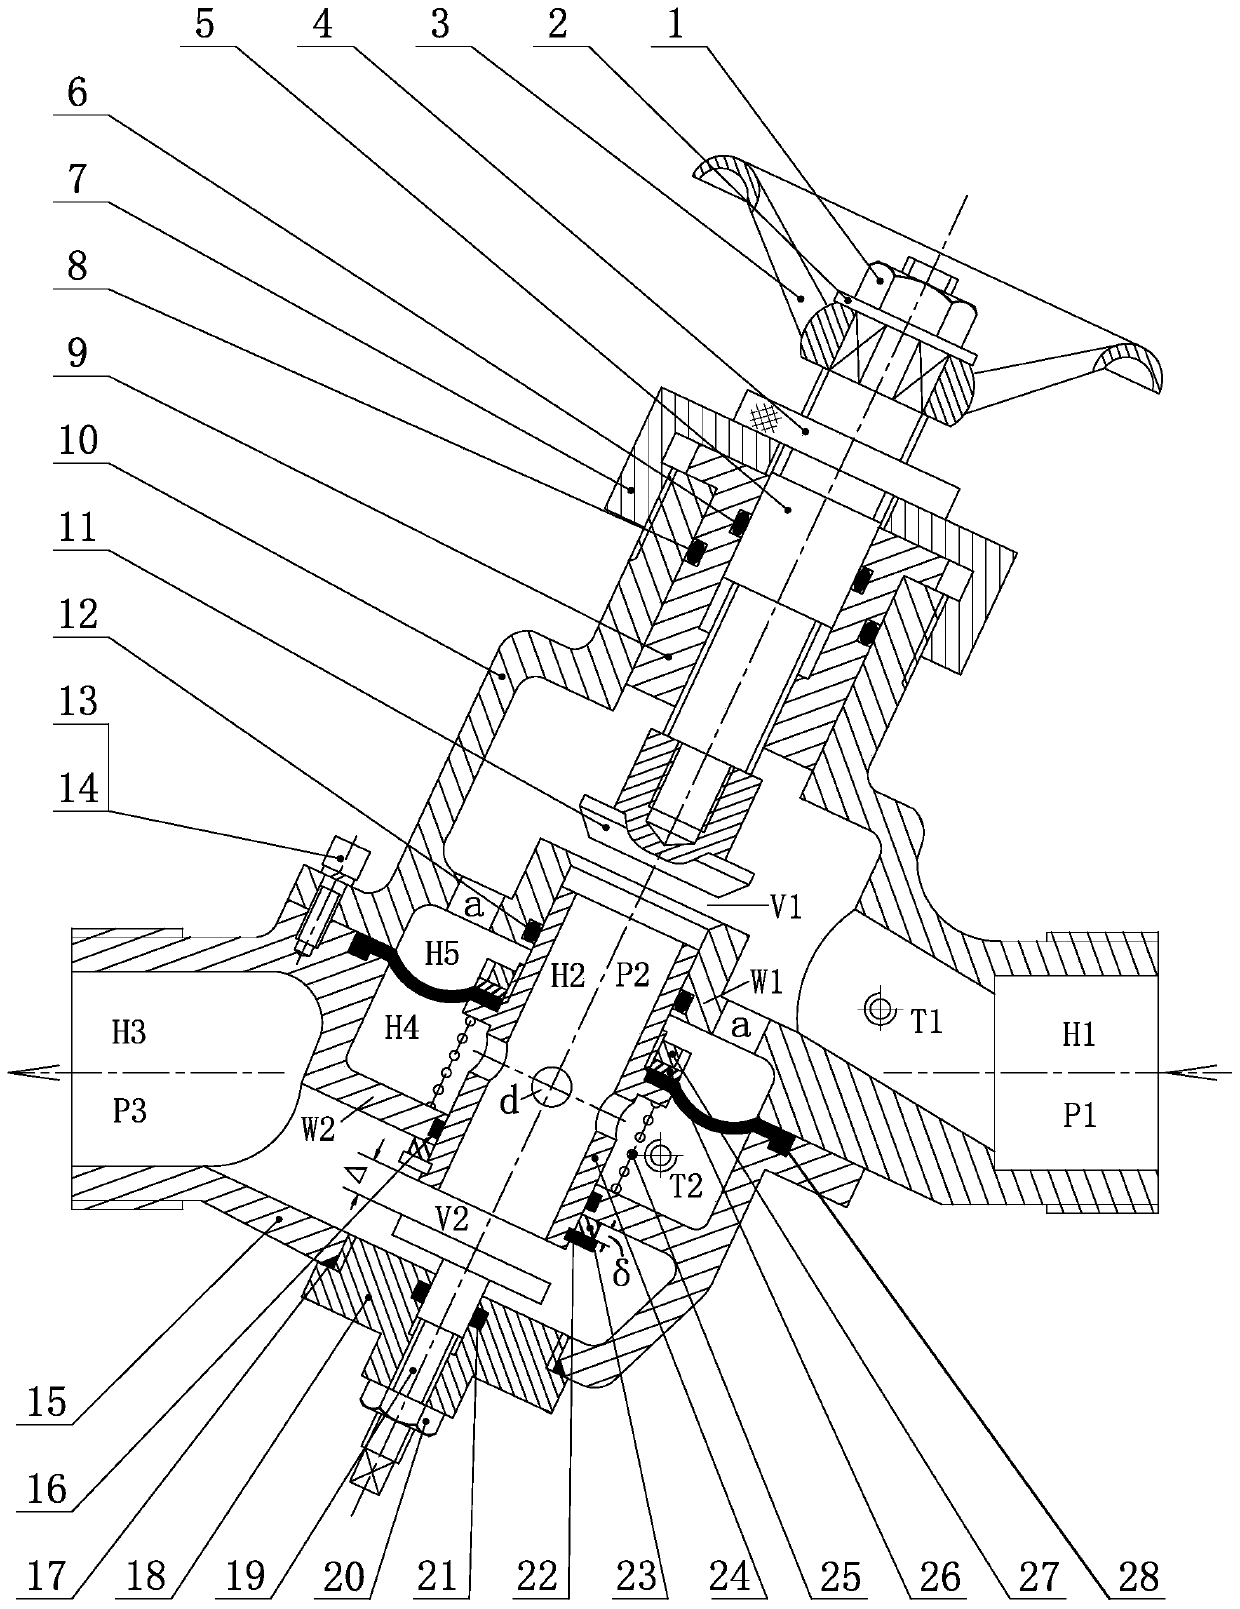 Self-operated type bevel valve